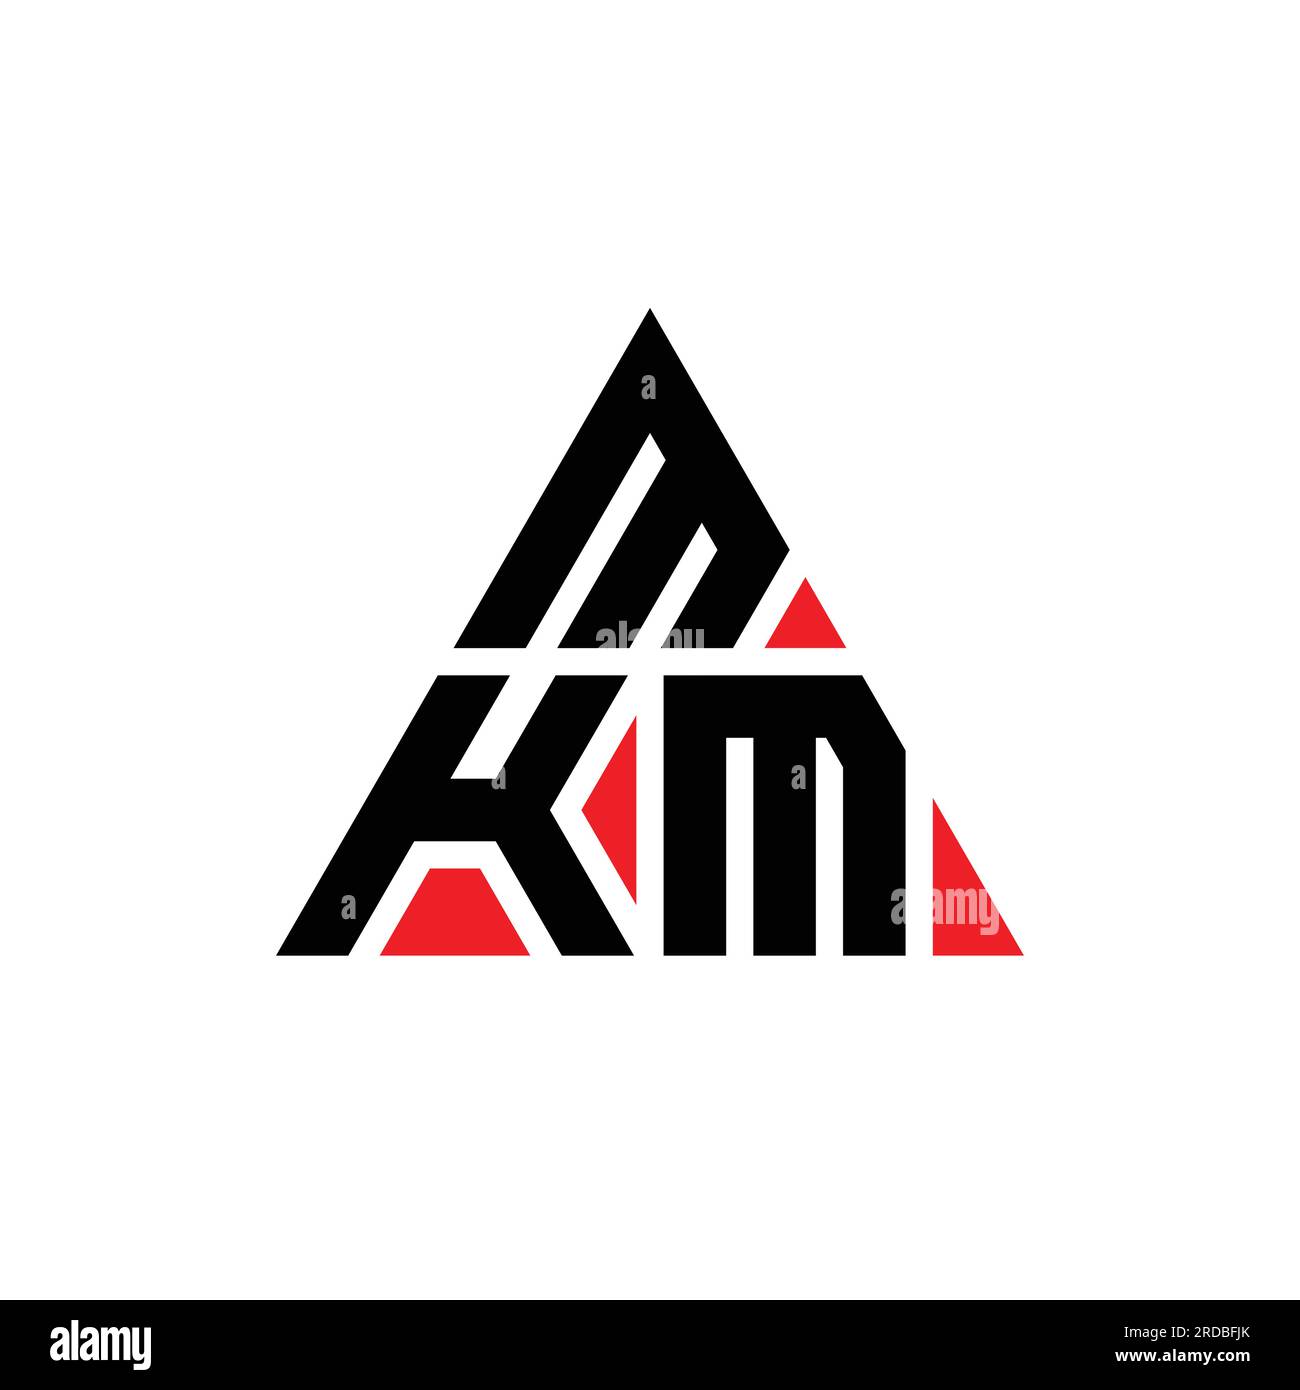 https://c8.alamy.com/comp/2RDBFJK/mkm-triangle-letter-logo-design-with-triangle-shape-mkm-triangle-logo-design-monogram-mkm-triangle-vector-logo-template-with-red-color-mkm-triangul-2RDBFJK.jpg